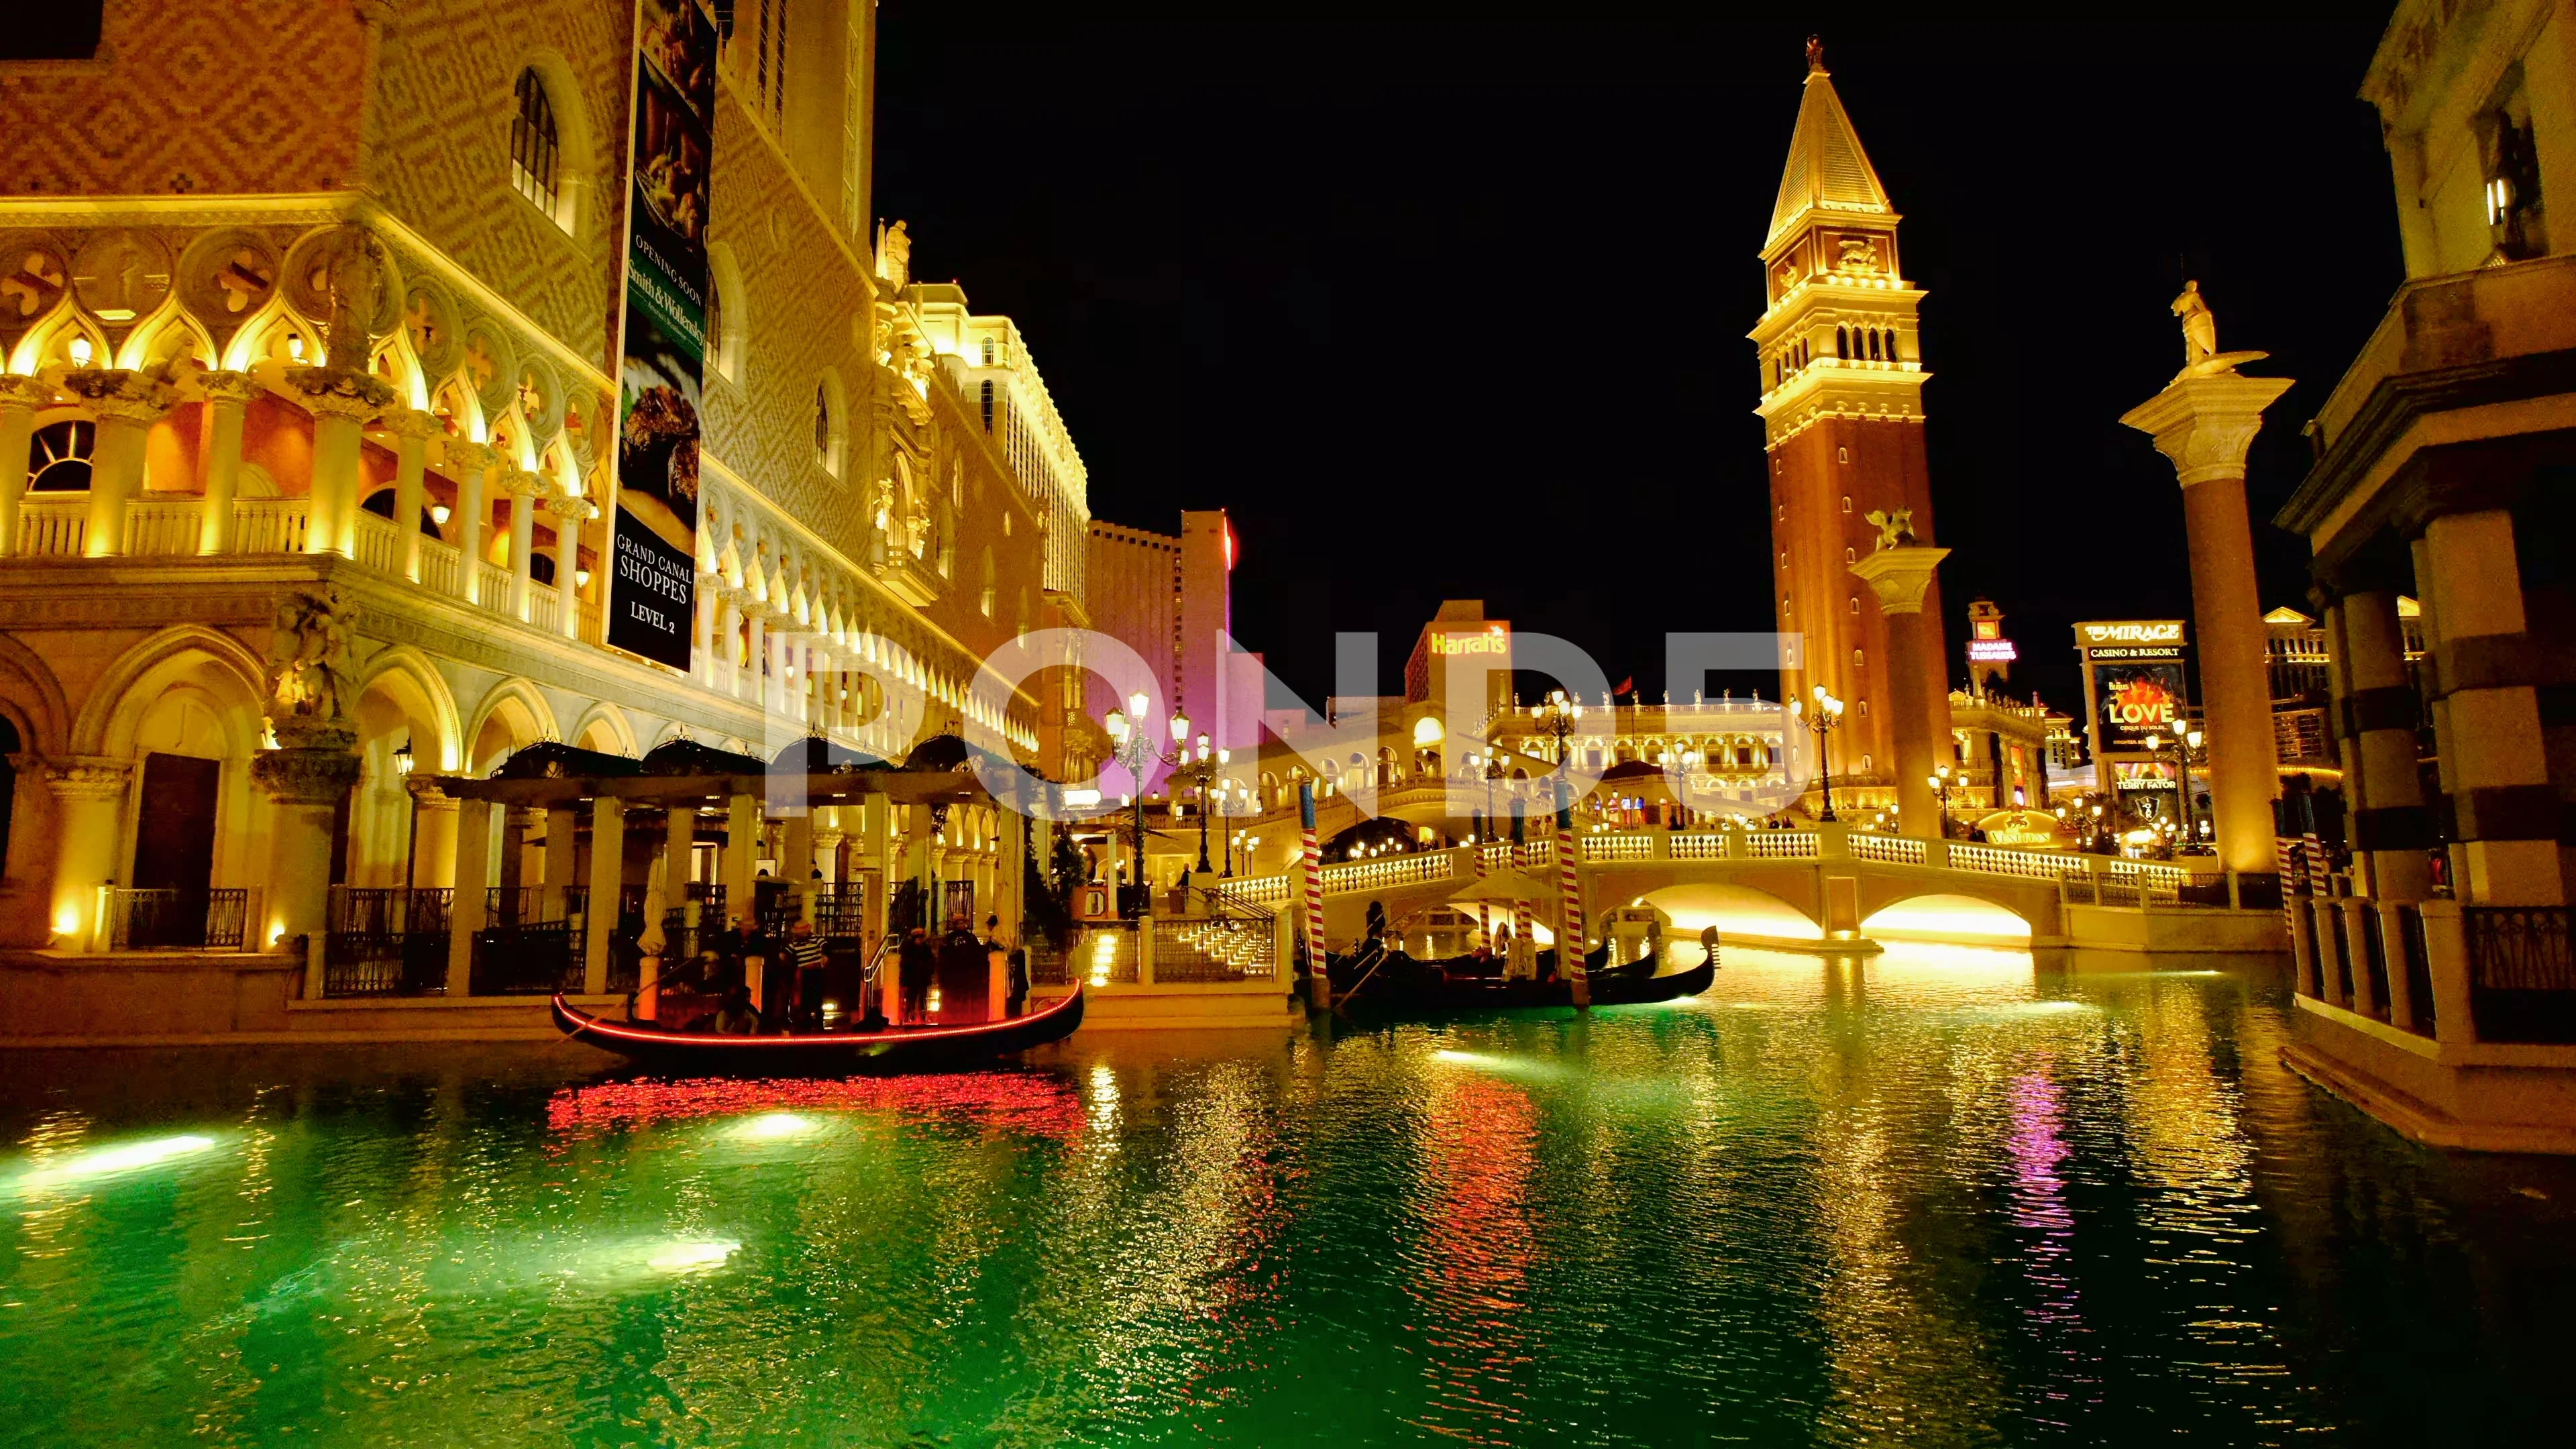 Gondola Ride at the Venetian Hotel and Casino